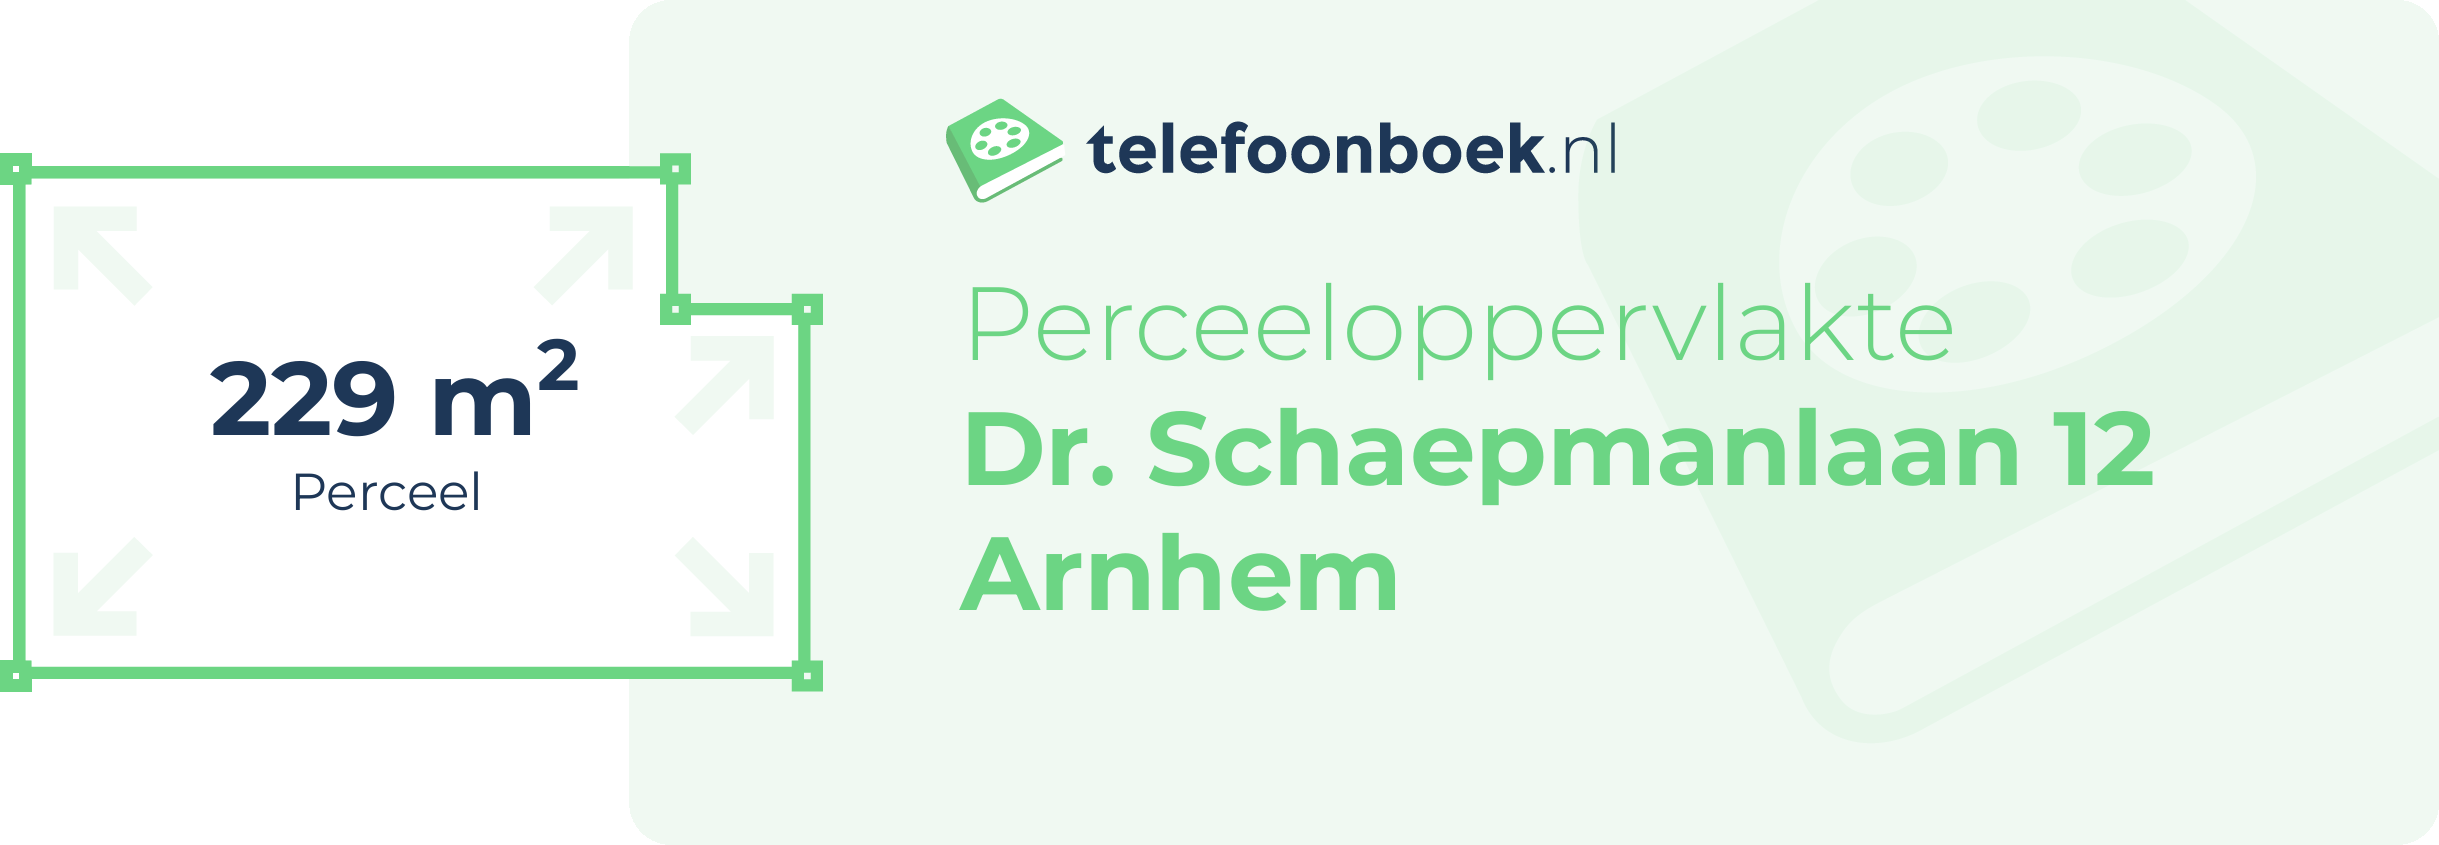 Perceeloppervlakte Dr. Schaepmanlaan 12 Arnhem